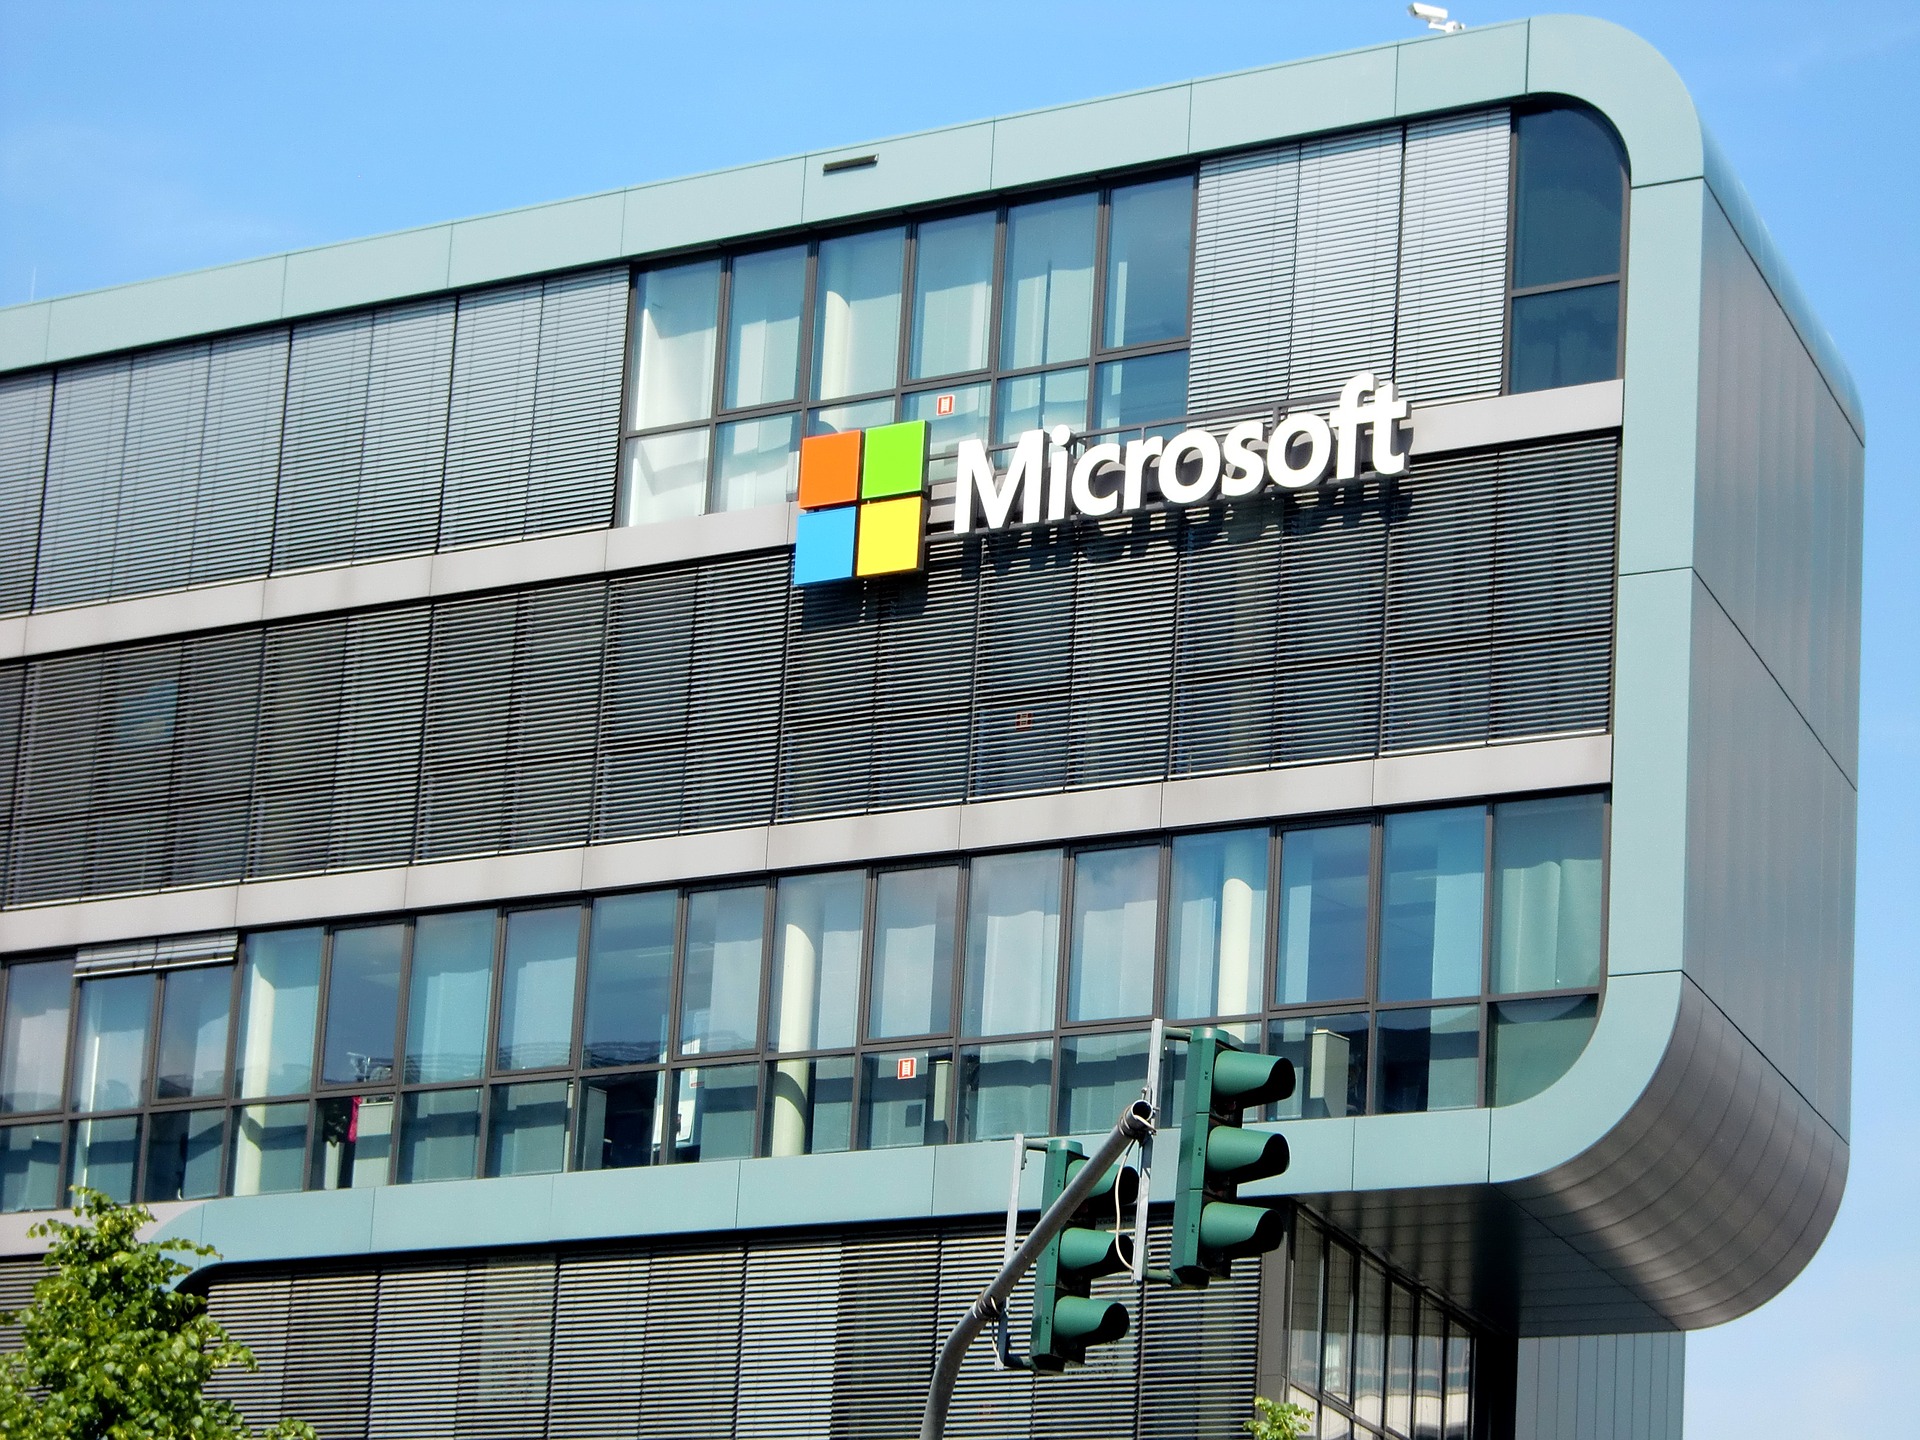 The outside of Microsoft headquarters